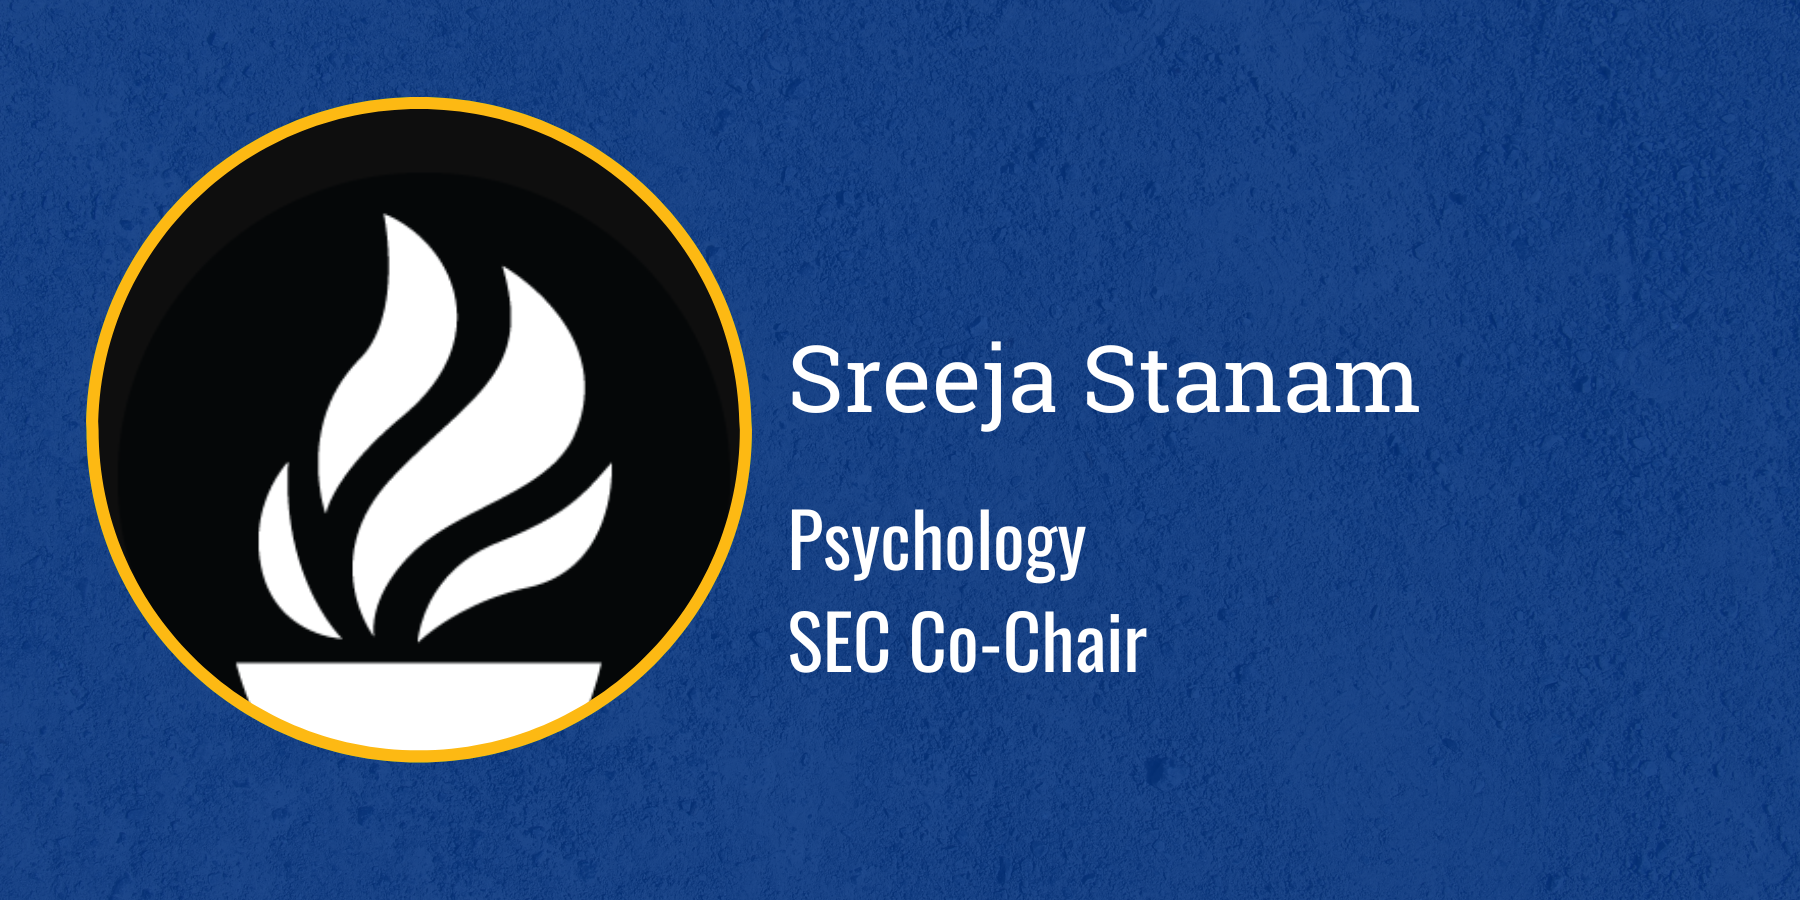 Sreeja Stanam 
Psychology
SEC Co-Chair